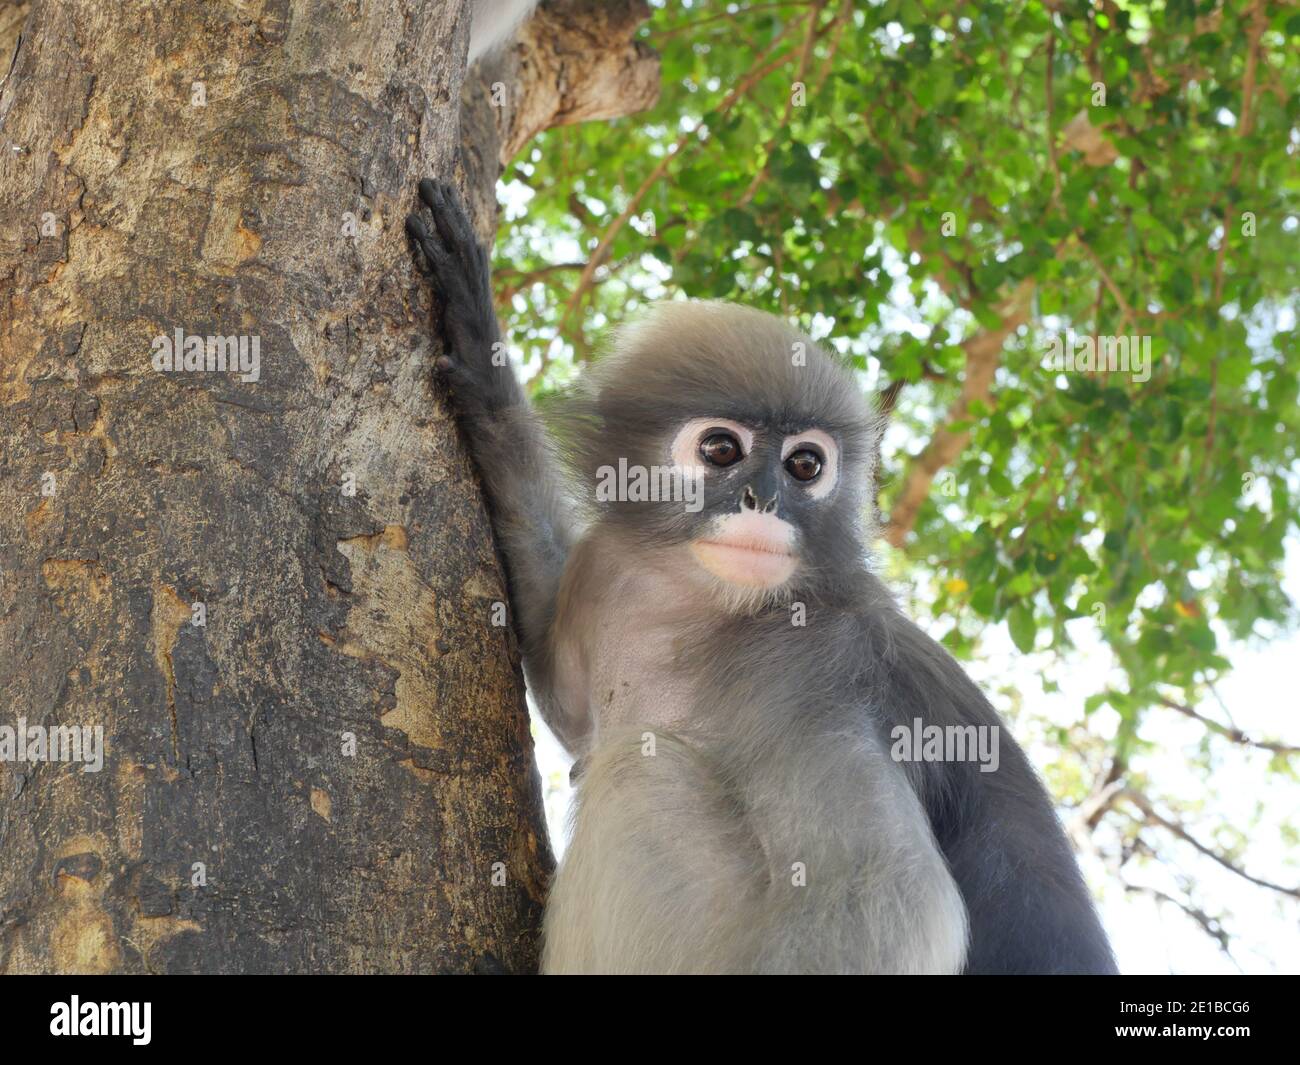 Dusky leaf monkey ( Spectacled langur ) sitting on tree in forest, Prachuap Khiri Khan Province, Thailand Stock Photo